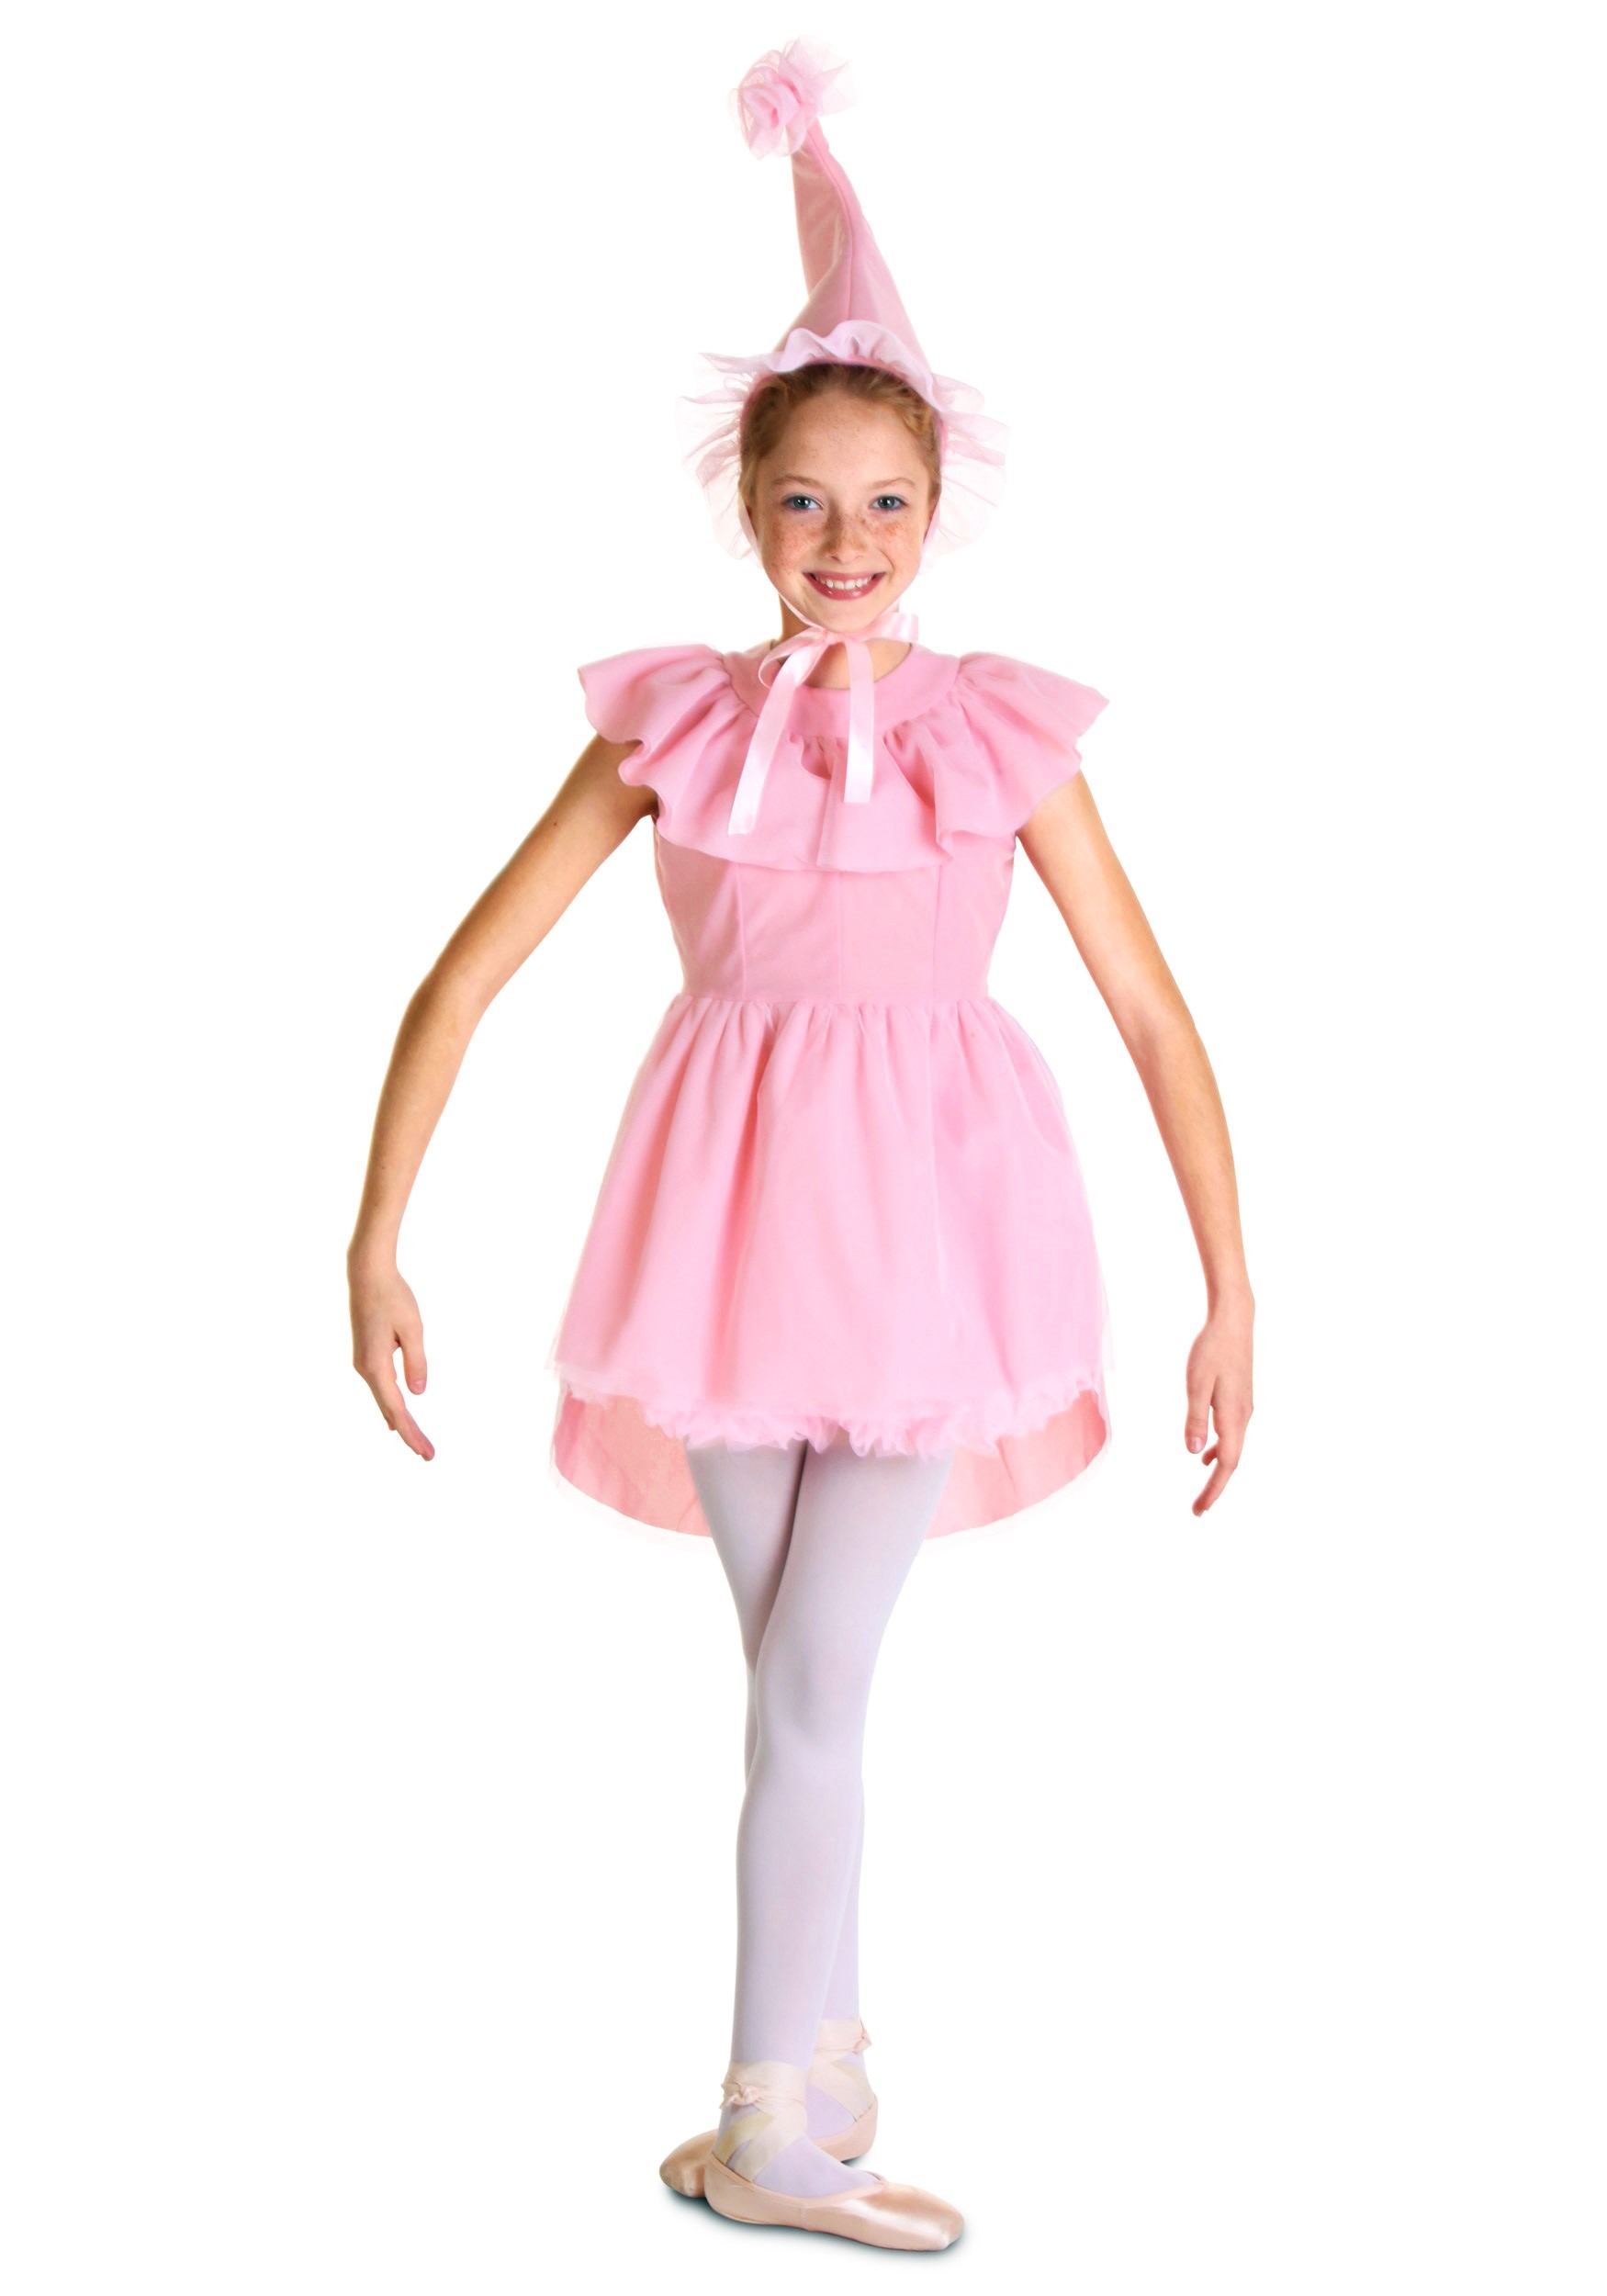 Photos - Fancy Dress Munchkin FUN Costumes  Ballerina Kids Costume Pink FUN1036 